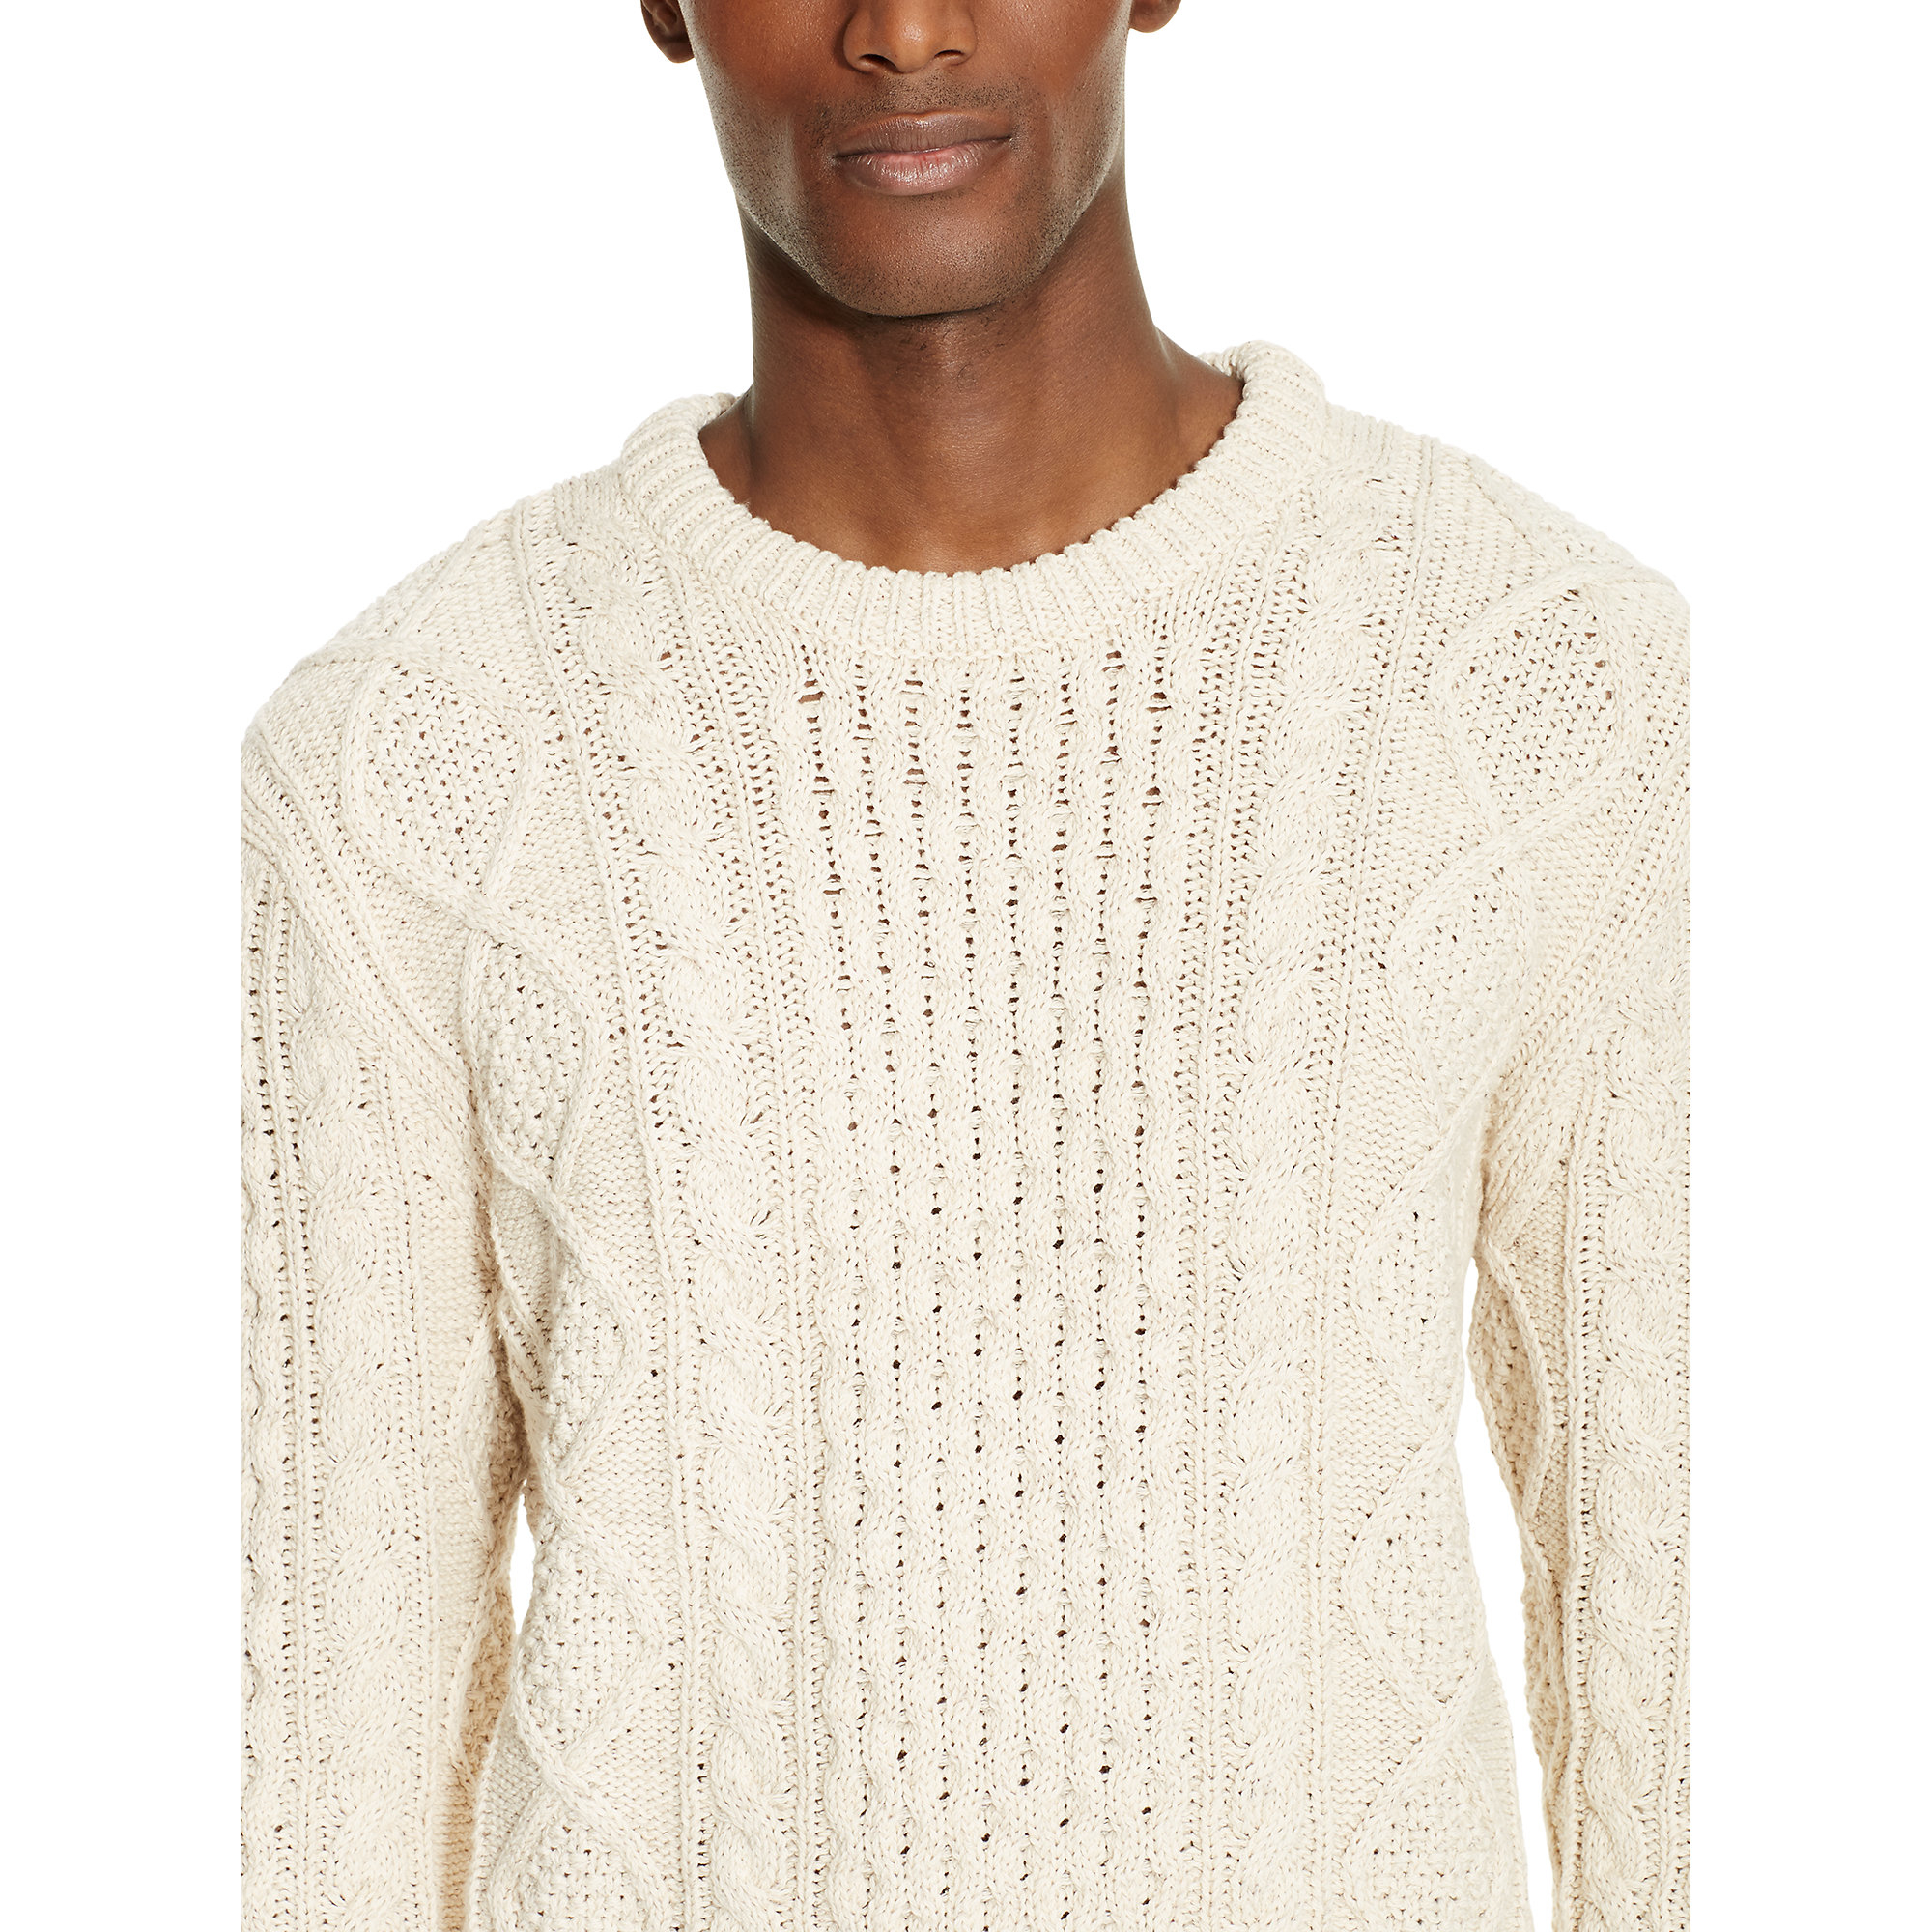 Polo Ralph Lauren Aran-knit Cotton Sweater in Cream (White) for Men - Lyst